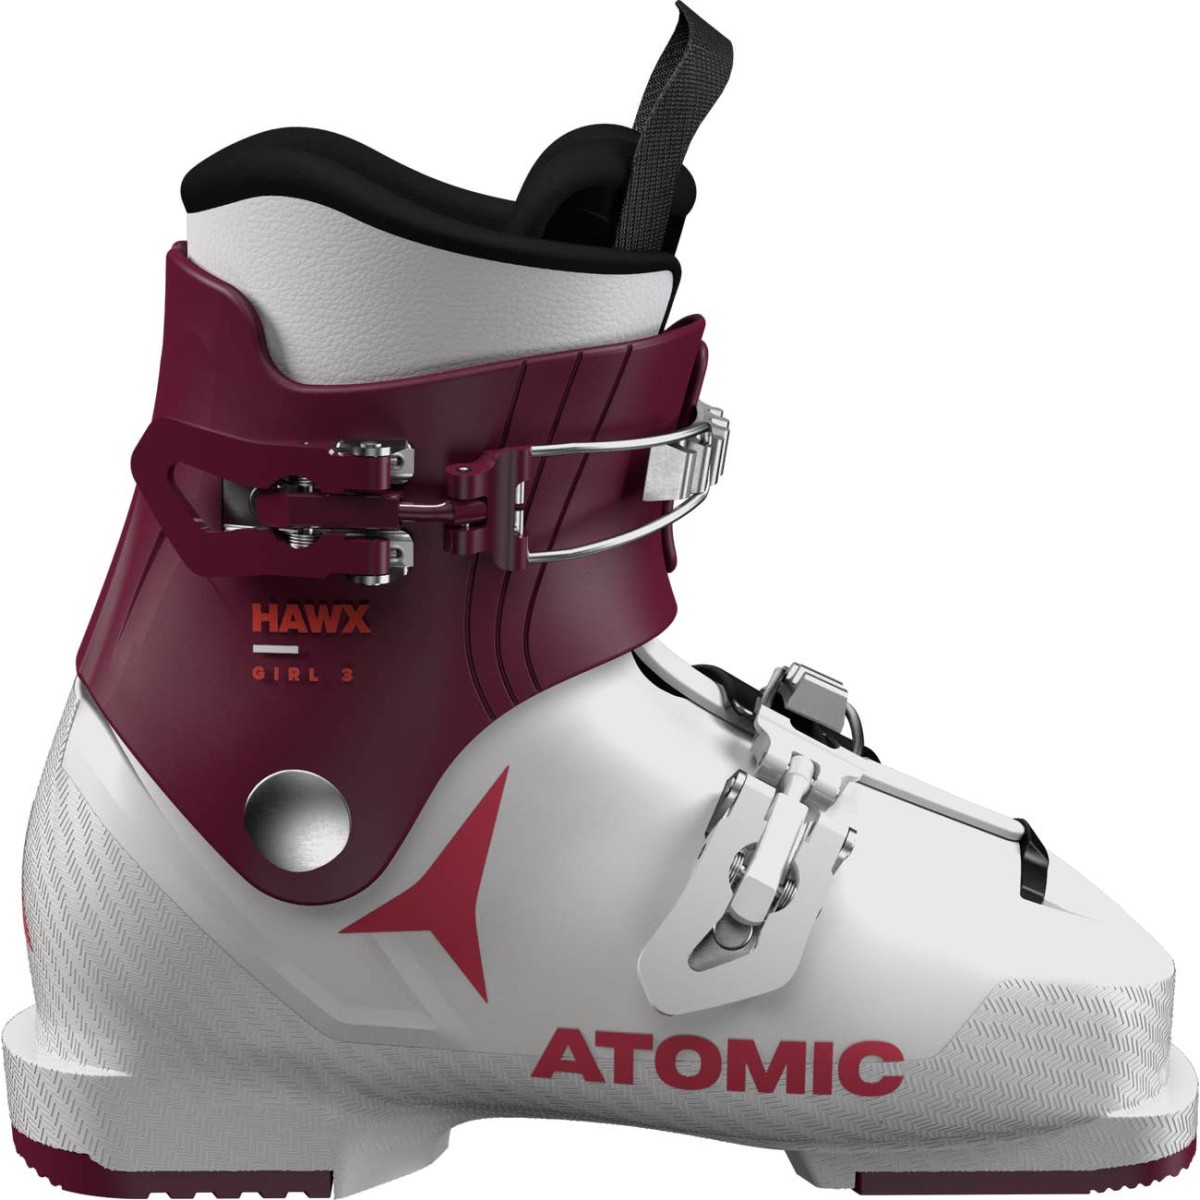 ATOMIC HAWX GIRL 2 alpine ski boots - white/berry